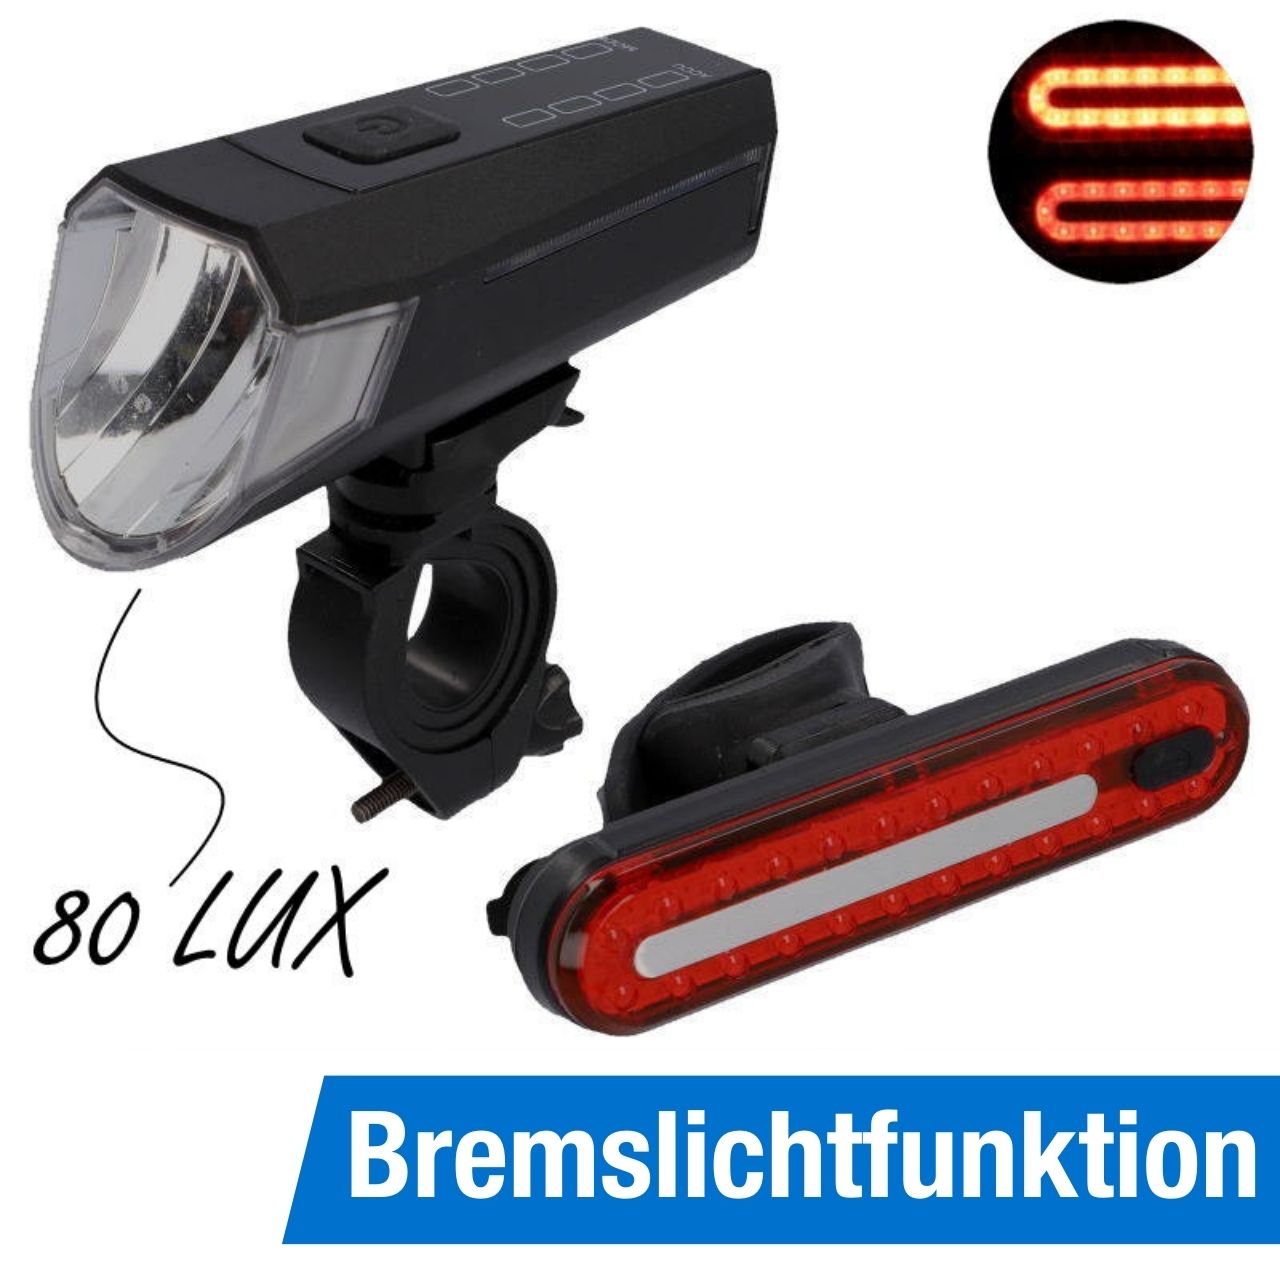 Relags LED Lampe USB 80 Lumen kaufen